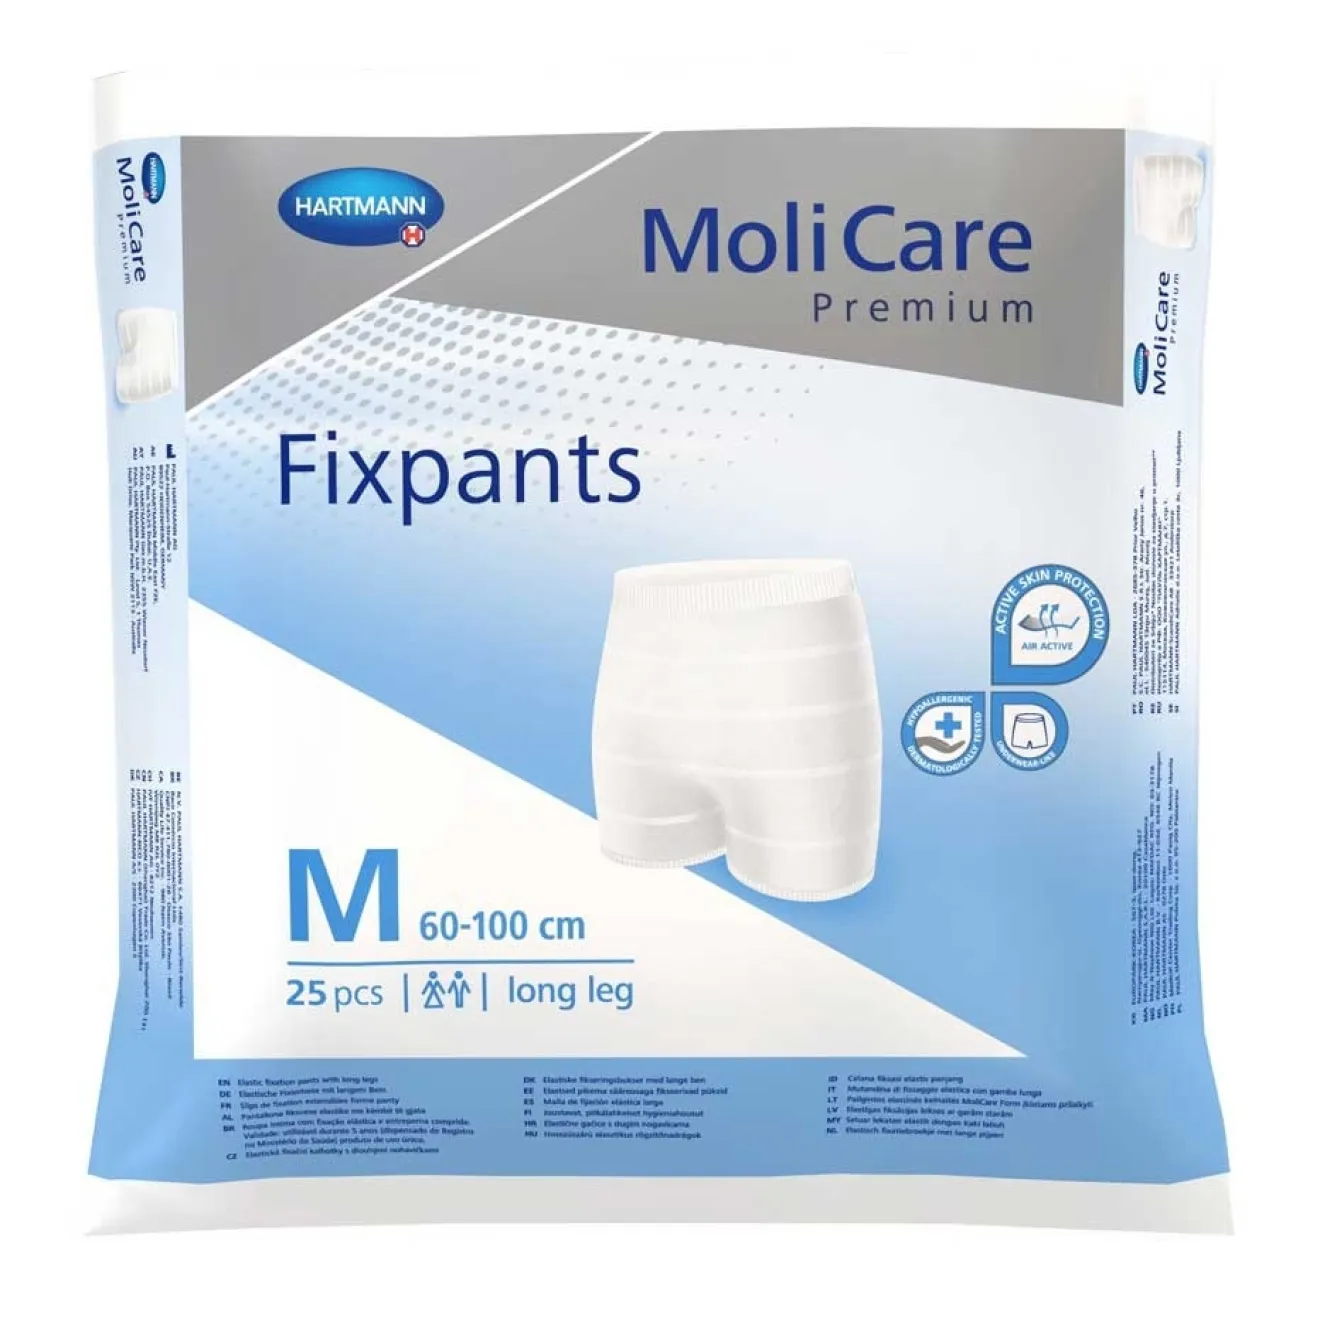 MOLICARE Premium Fixpants long leg Gr.M 5 ST 947796